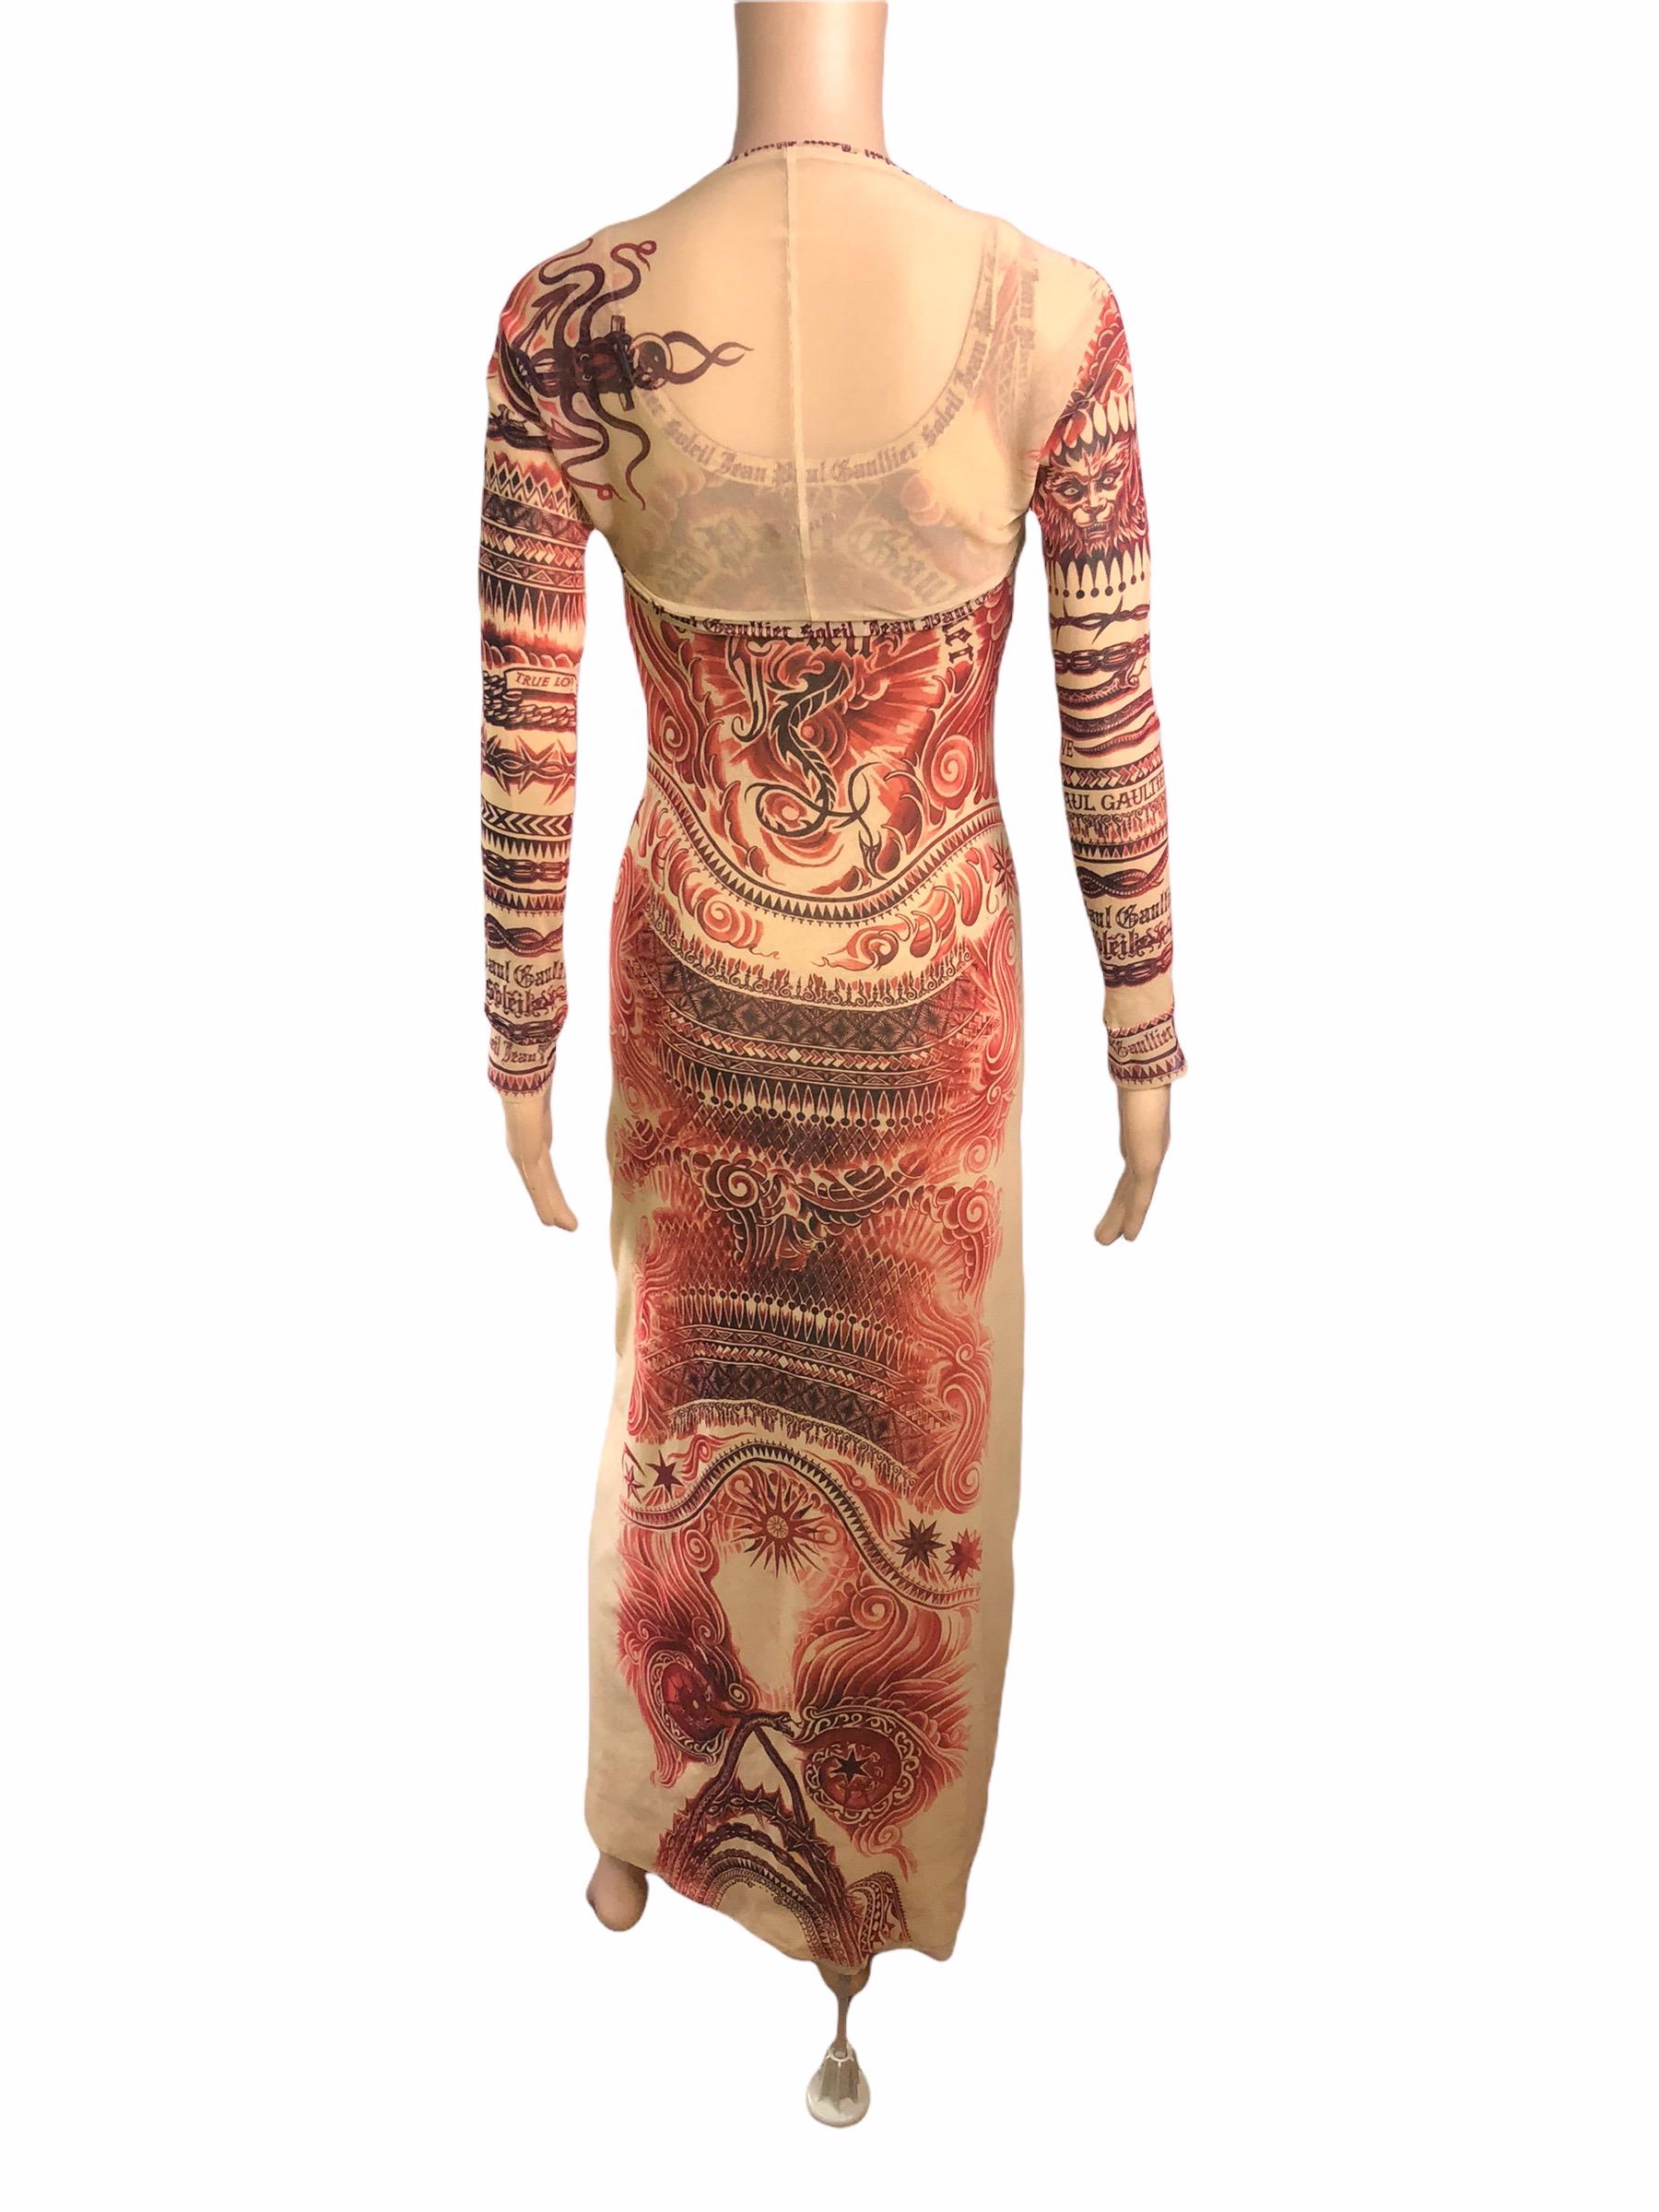 Jean Paul Gaultier Soleil Vintage Tattoo Bodycon Mesh Bolero Dress 2 Piece Set For Sale 1